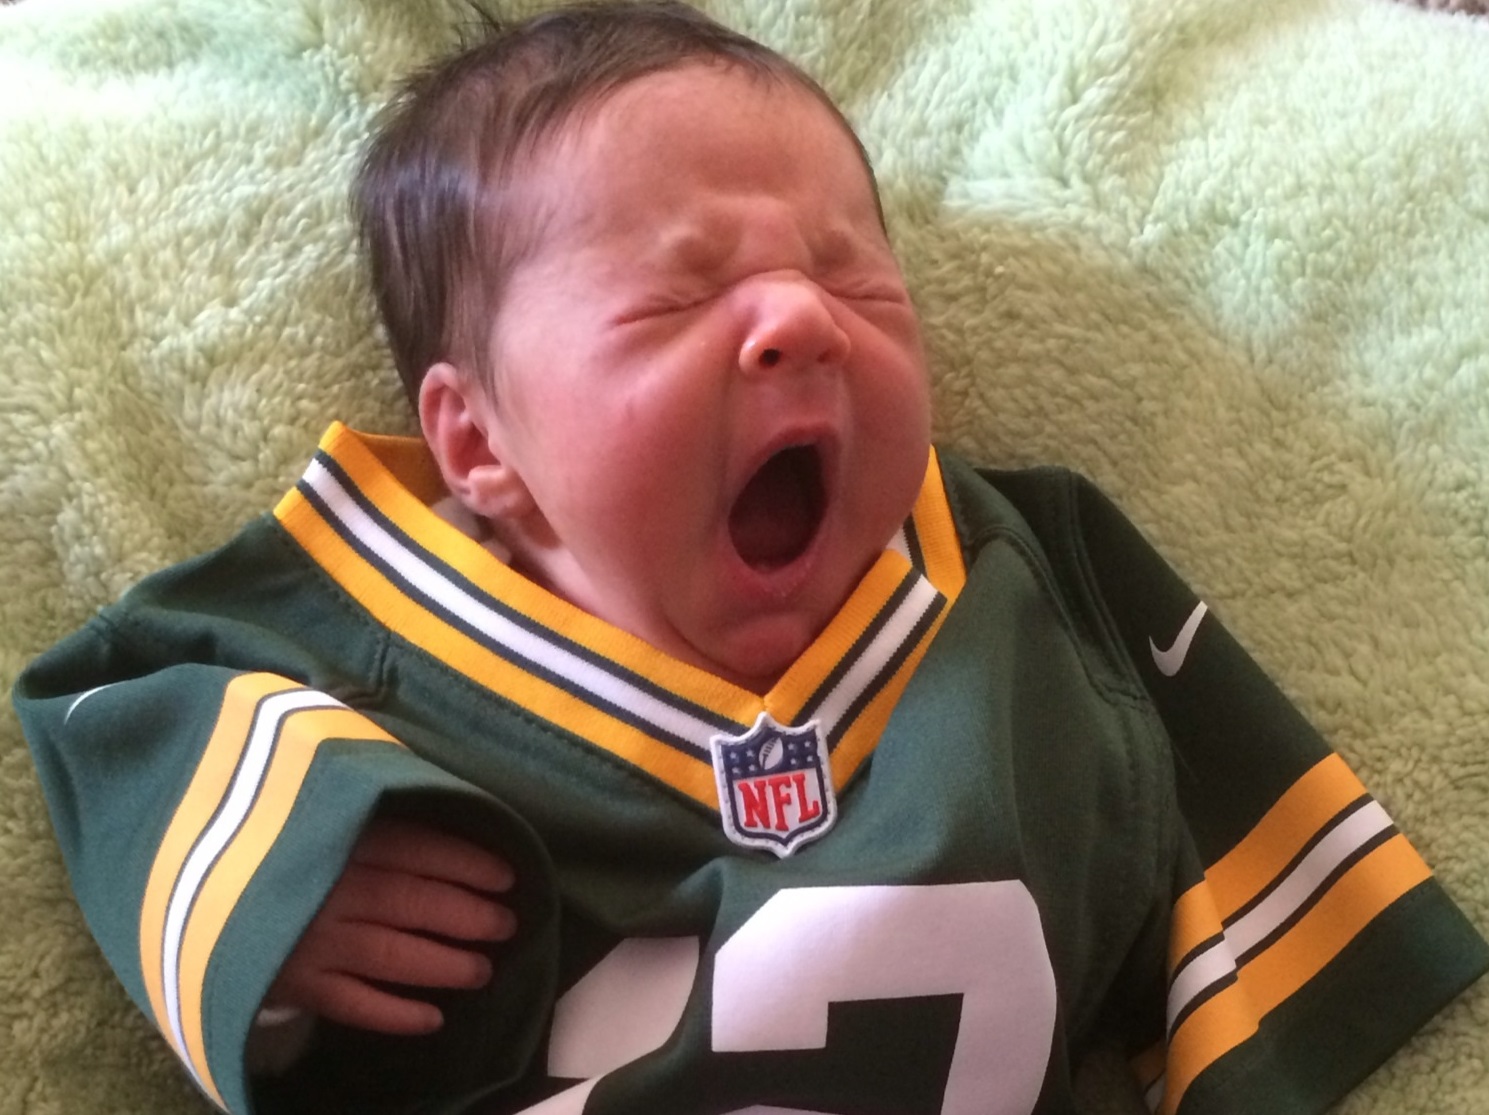 Baby with broken collarbone named after injured quarterback Aaron